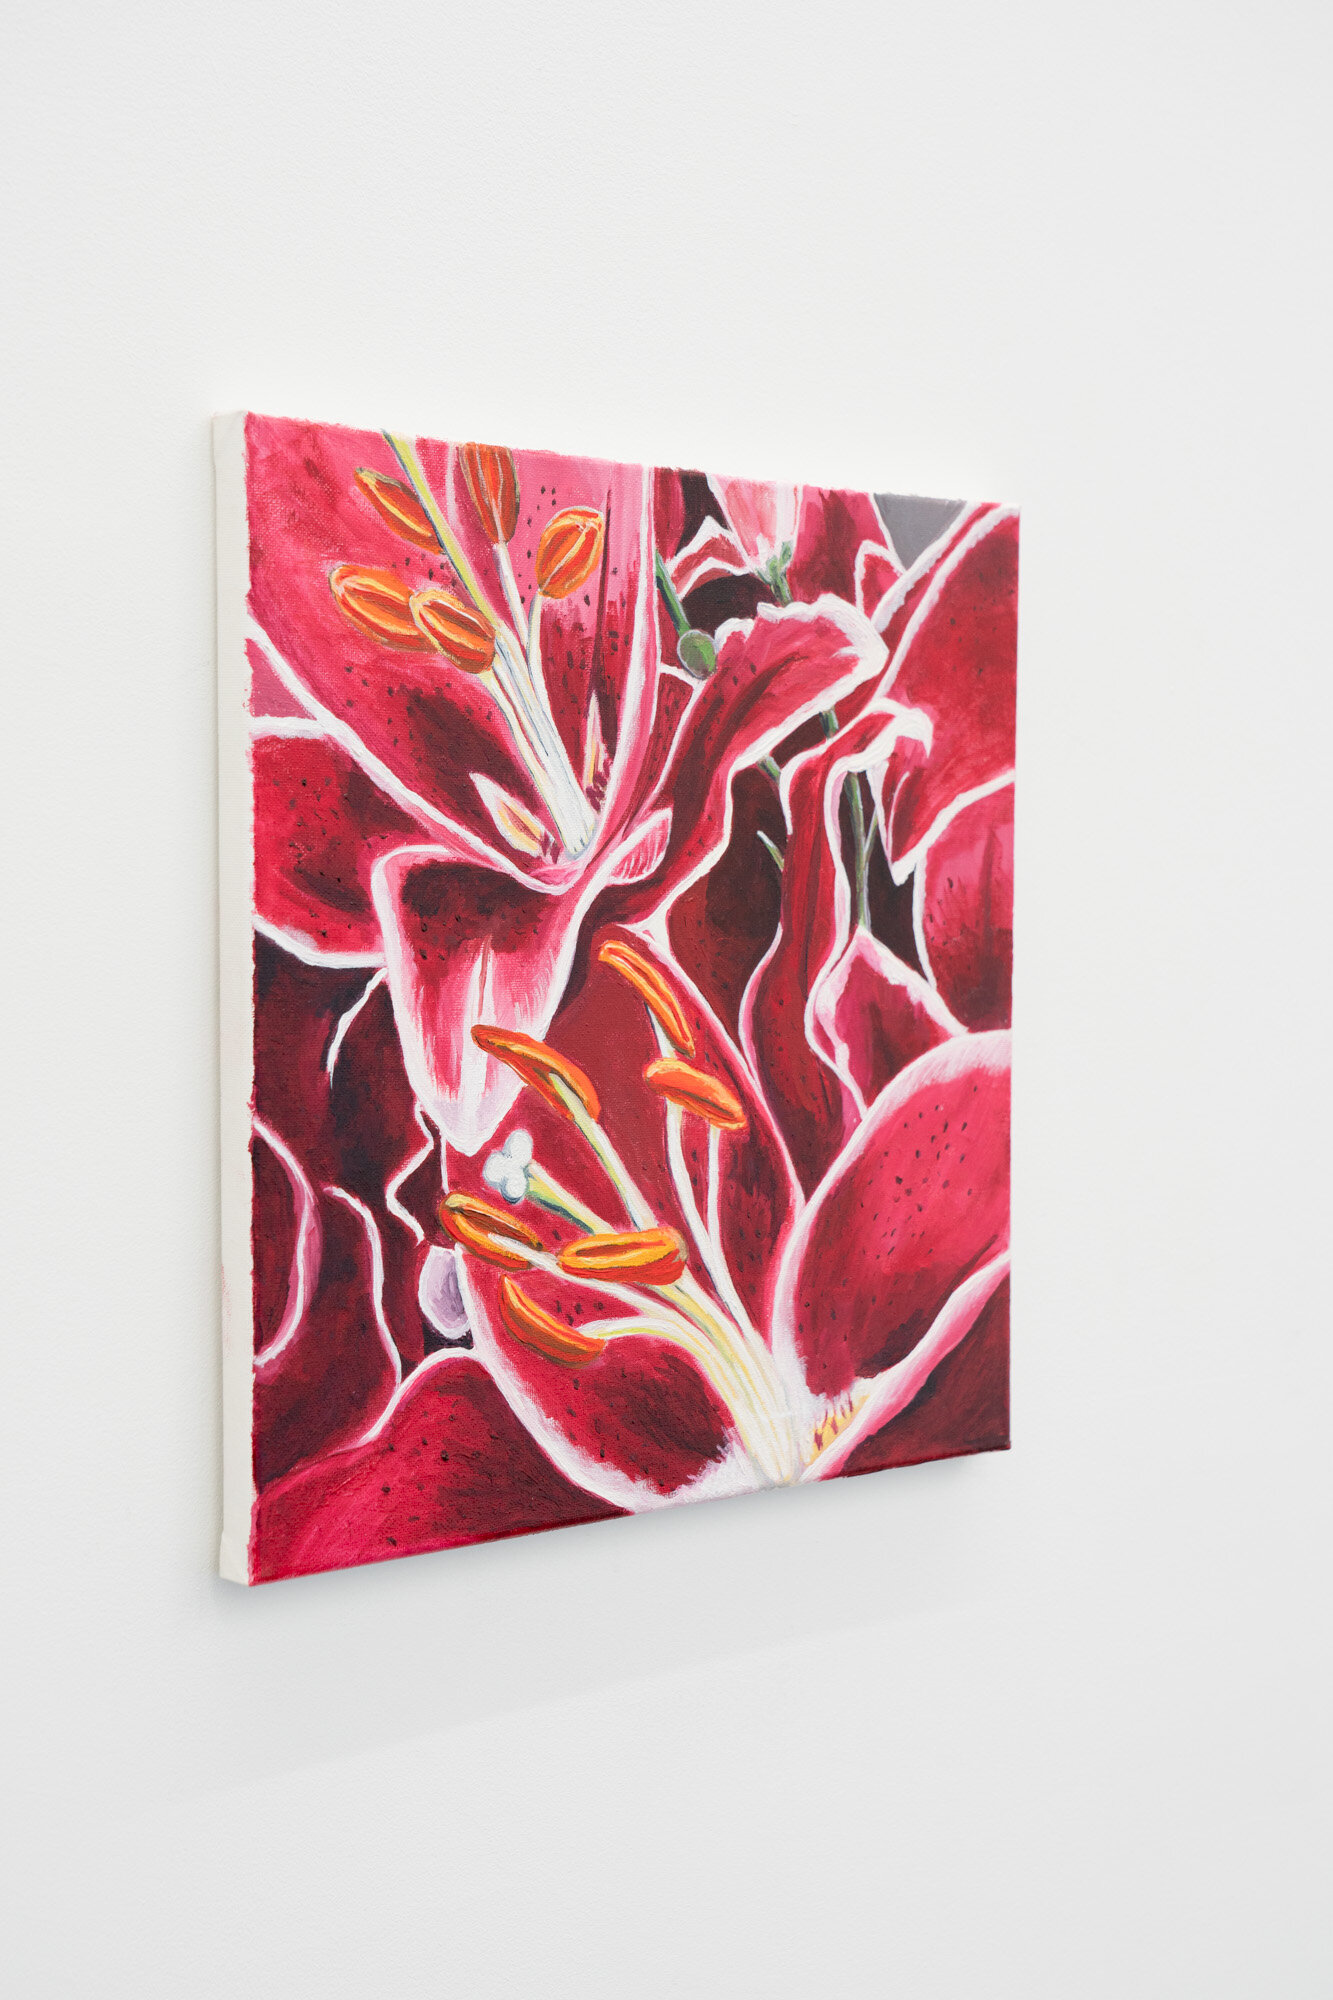  Shana Sharp  Lilies , 2019 Oil on canvas 14 x 14 inches 